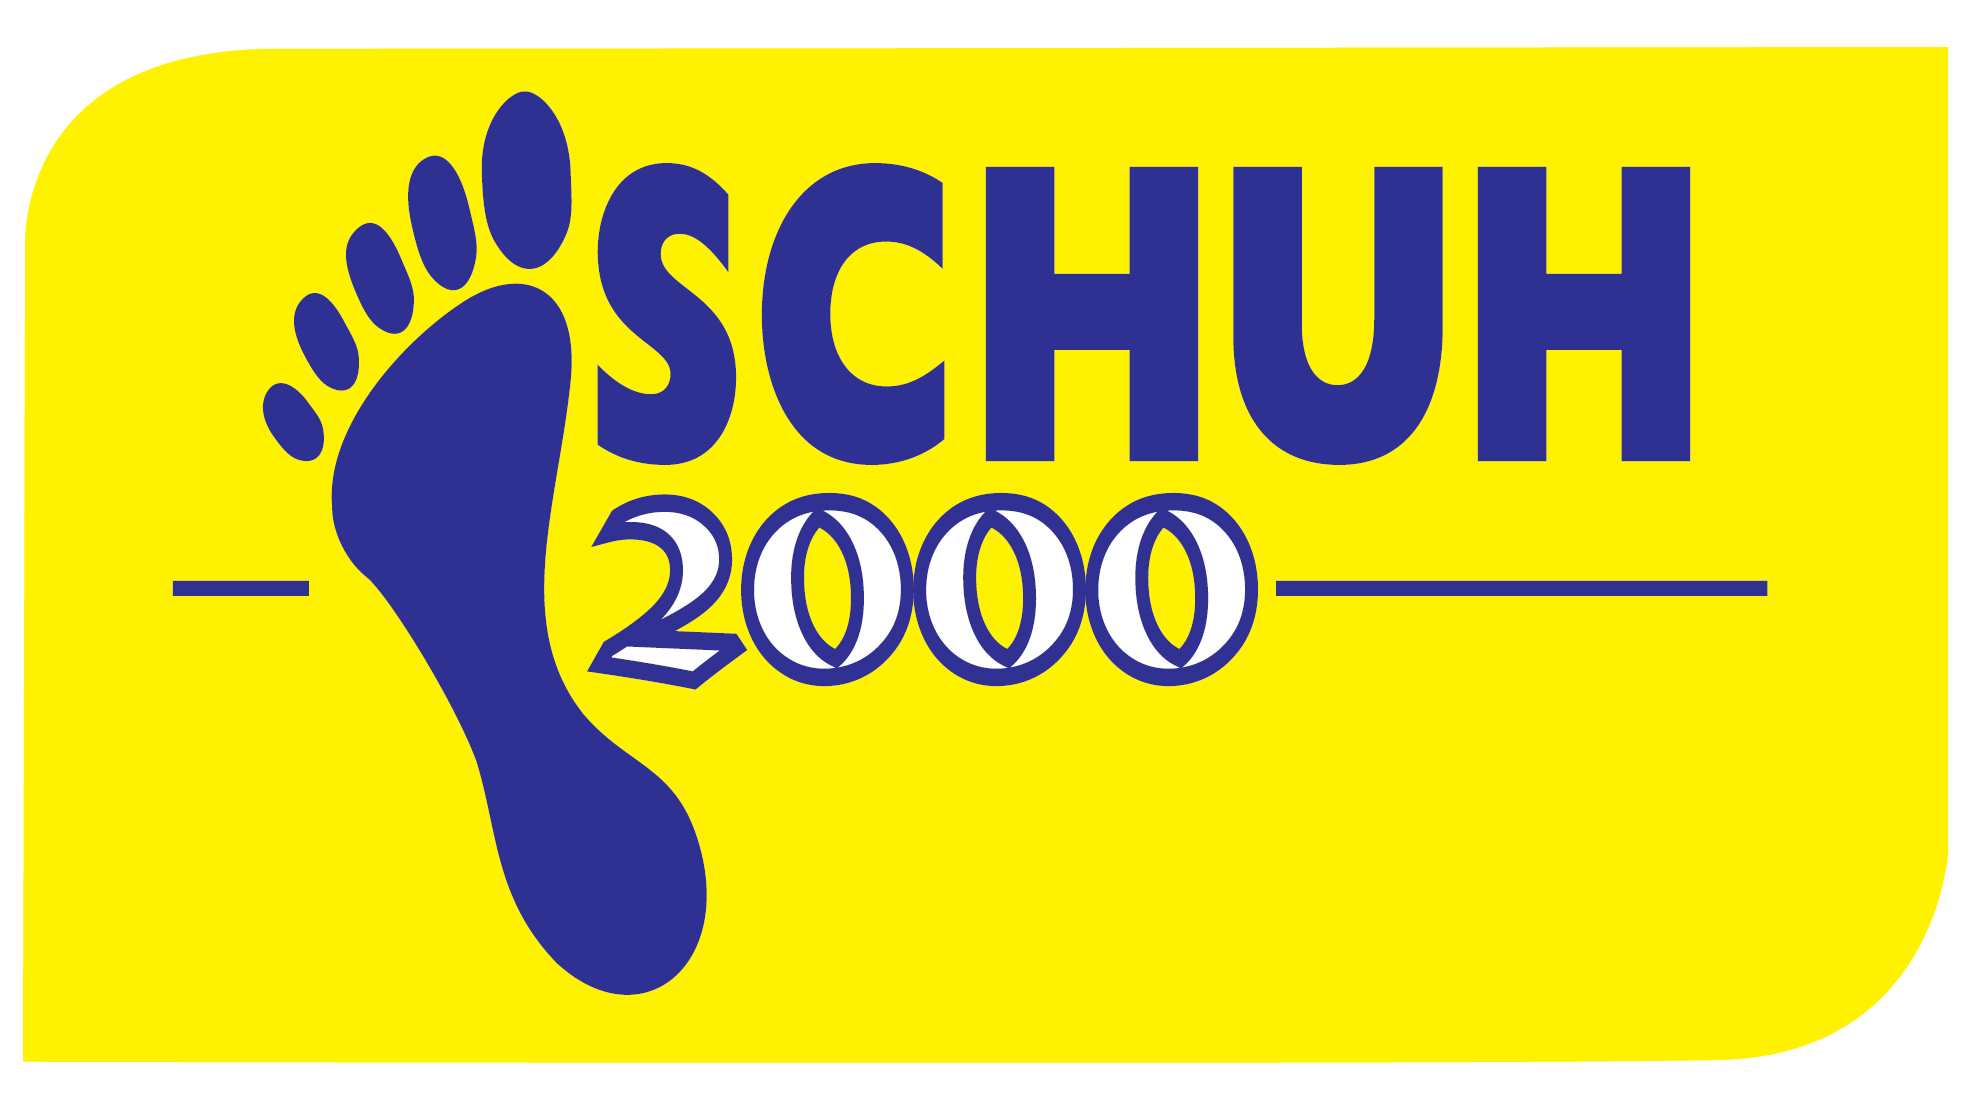 Schuh 2000